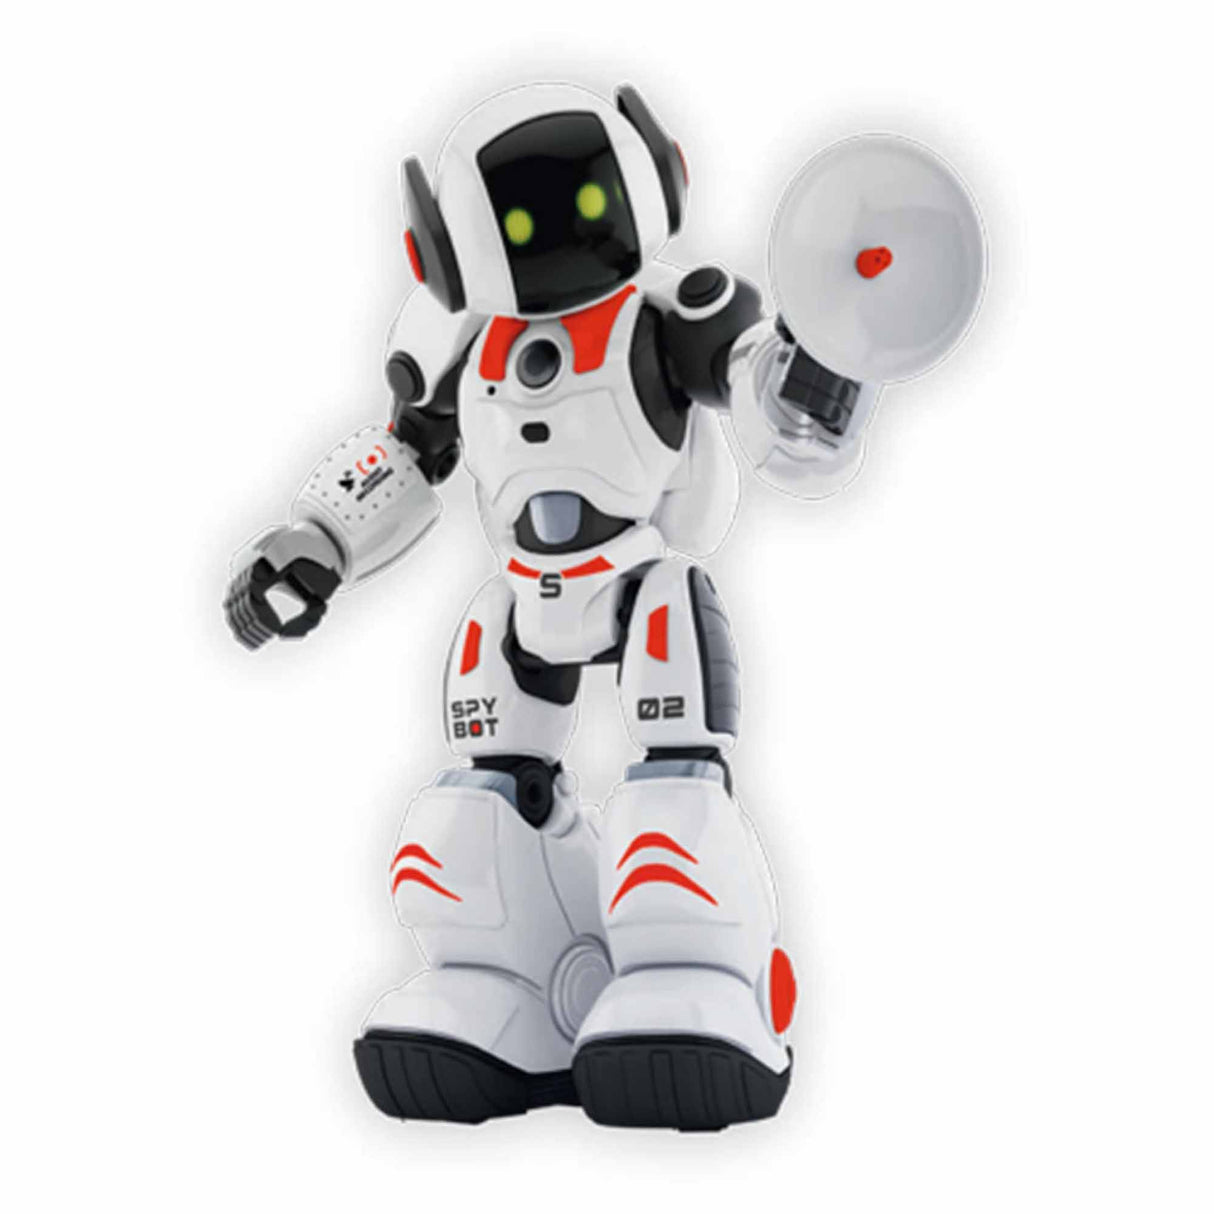 Xtrem Bots - James The Spy Bot